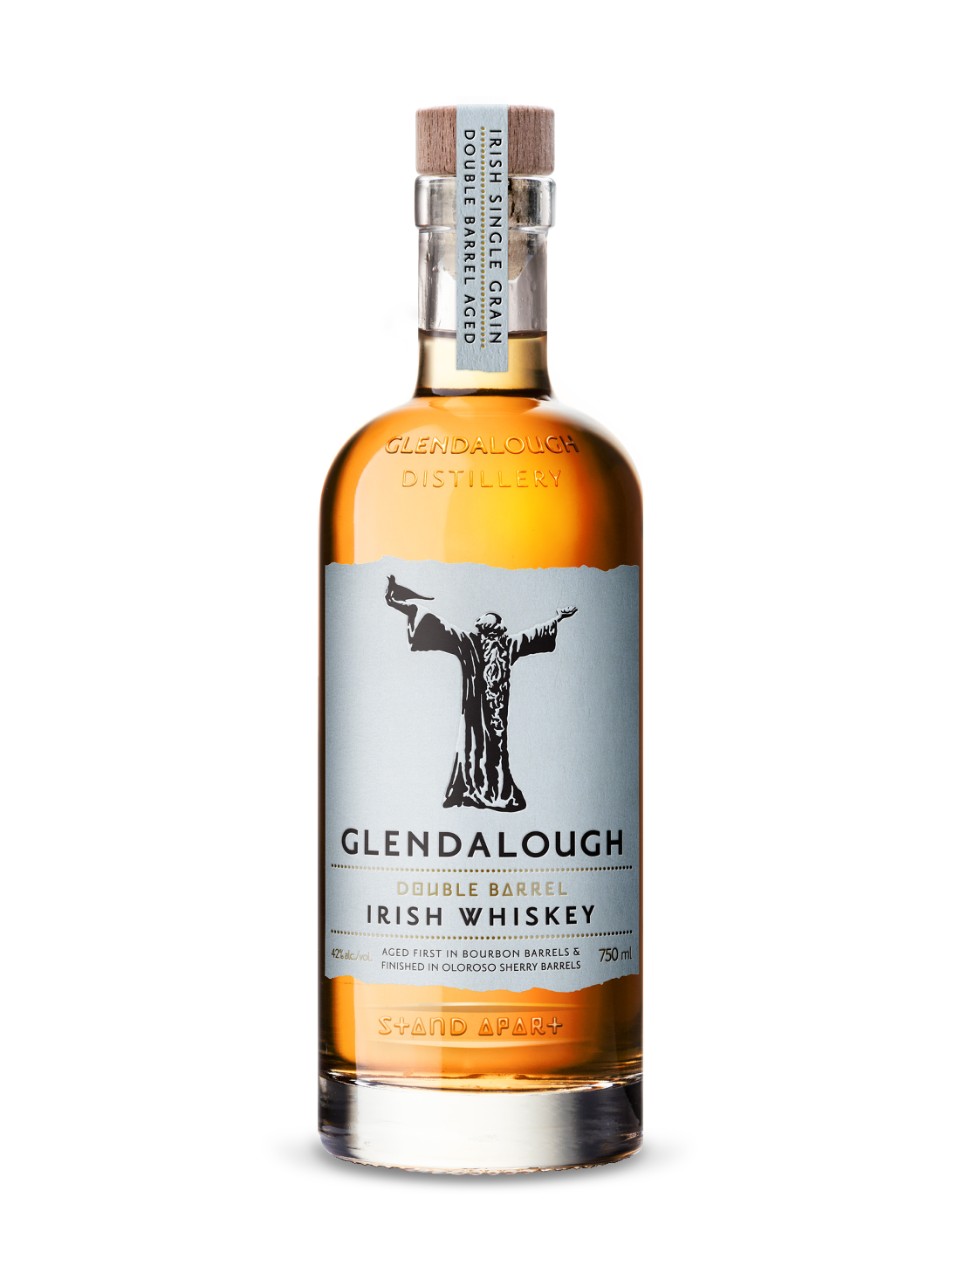 Glendalough Double Barrel Irish Whiskey from LCBO